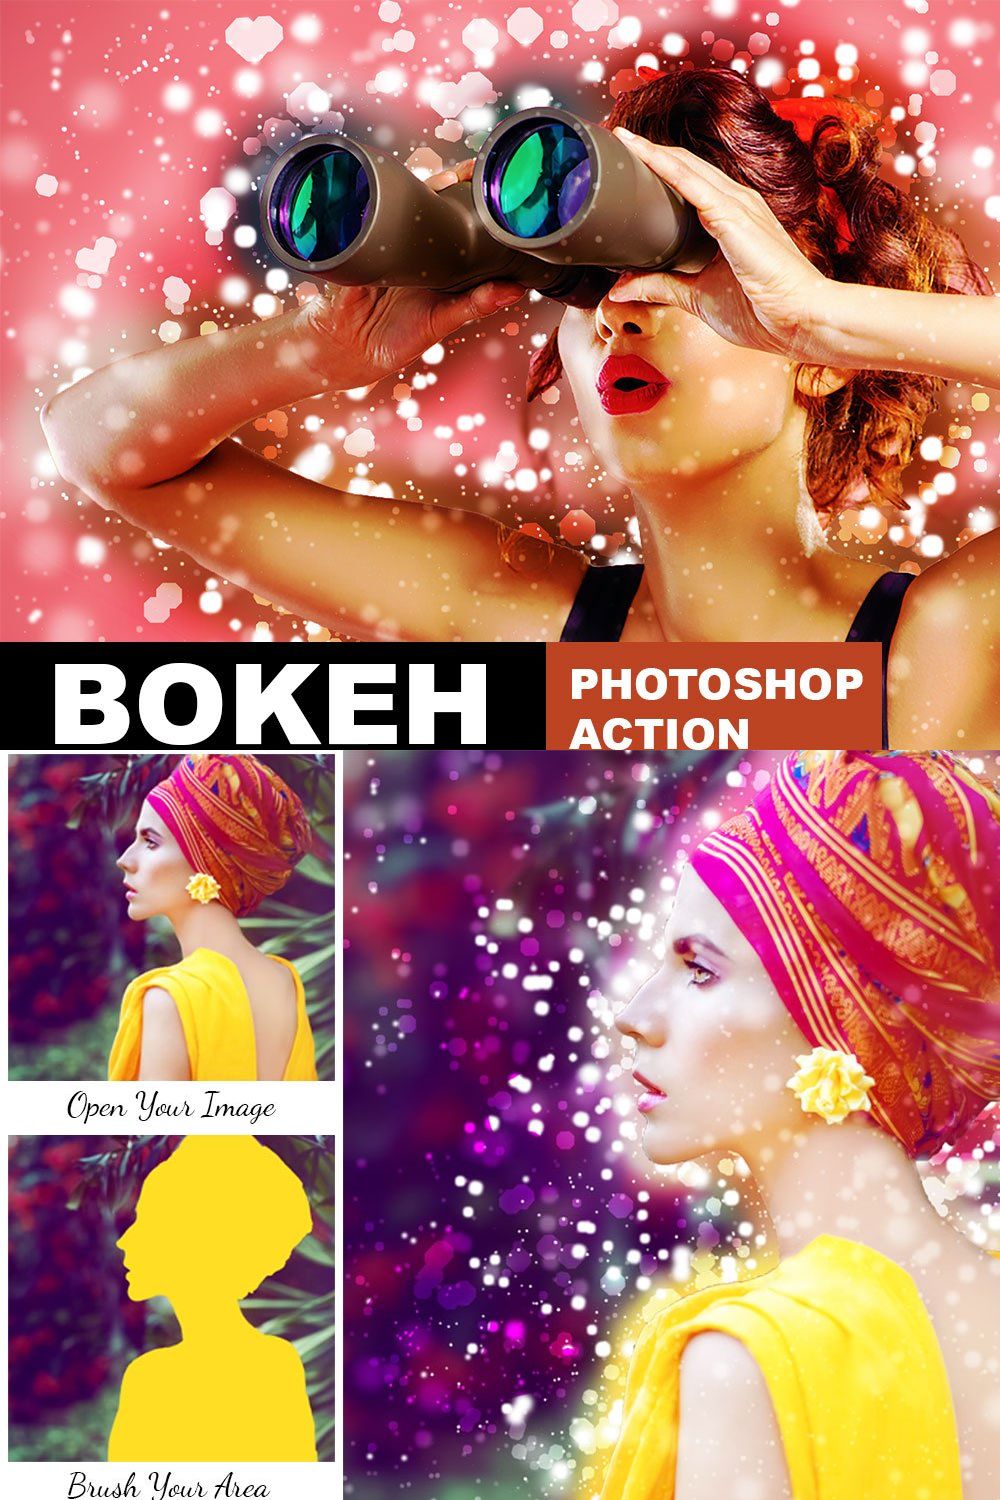 Bokeh Effect Photoshop Action pinterest preview image.